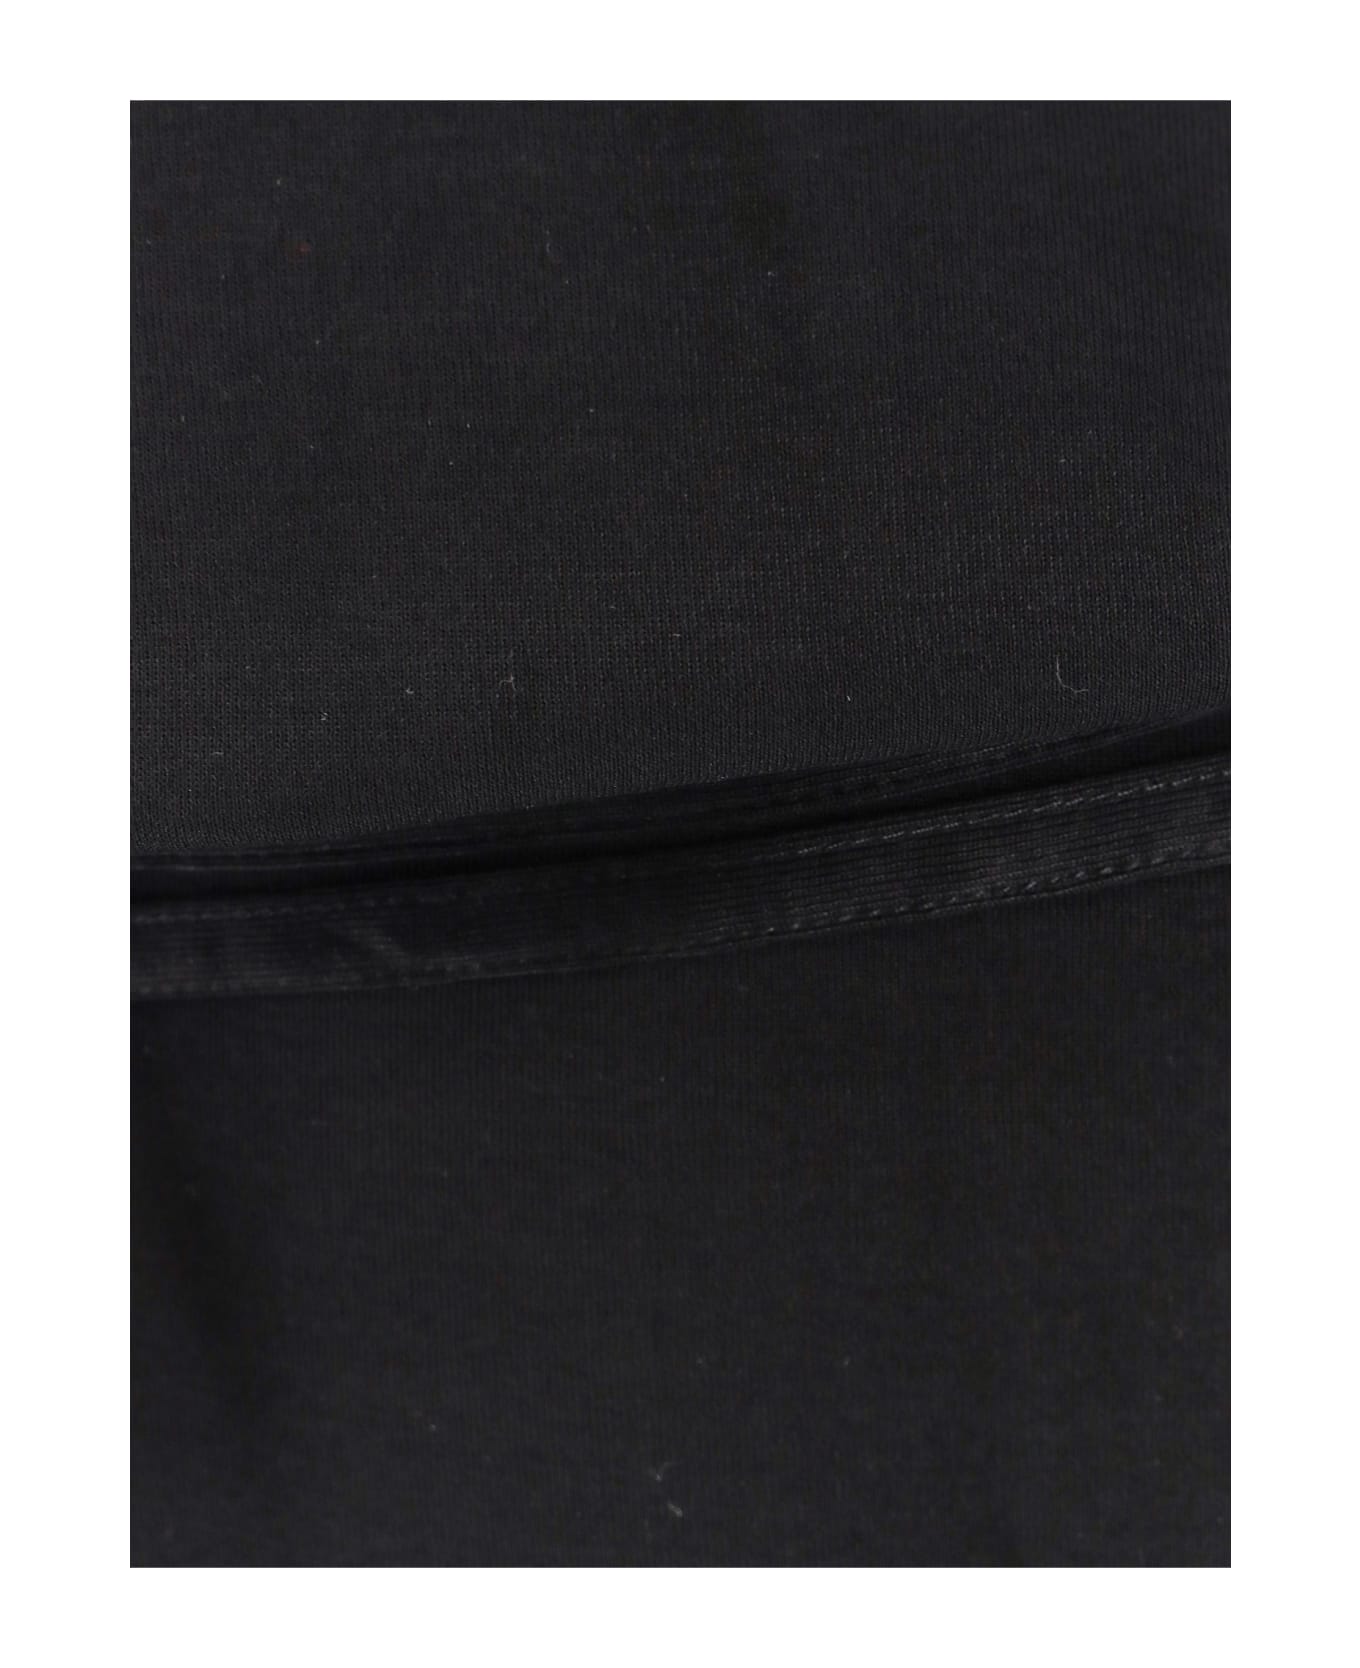 Lemaire T-shirt Dress - BLACK ワンピース＆ドレス